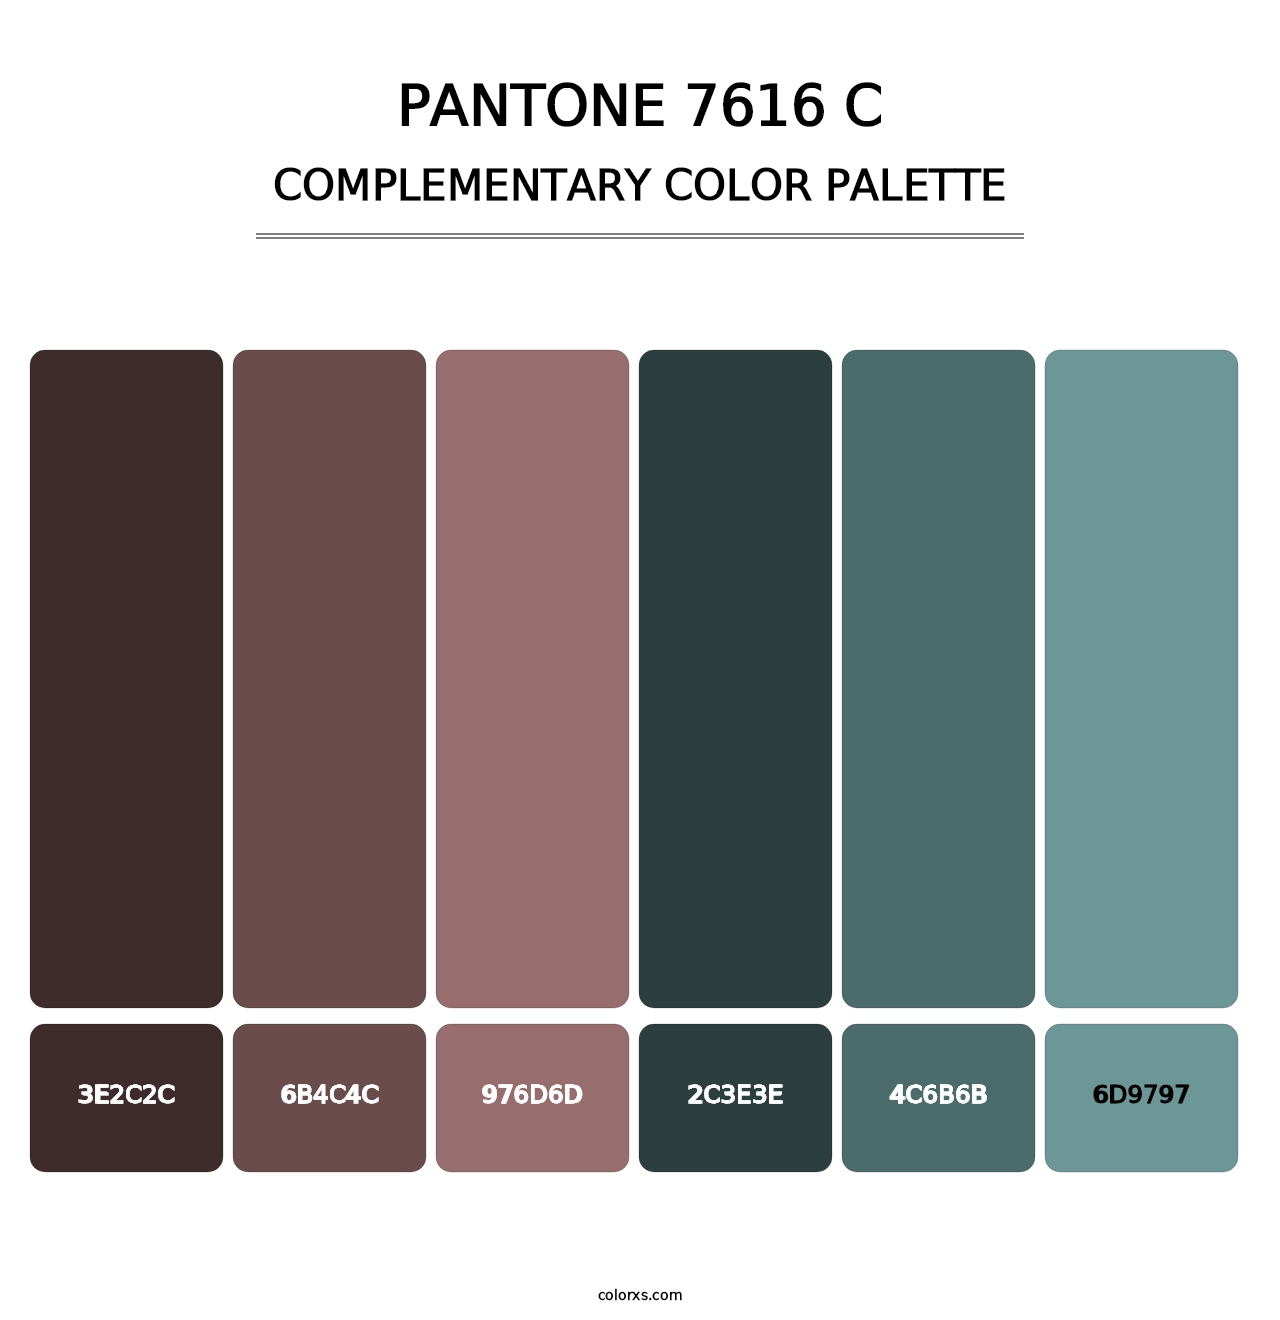 PANTONE 7616 C - Complementary Color Palette